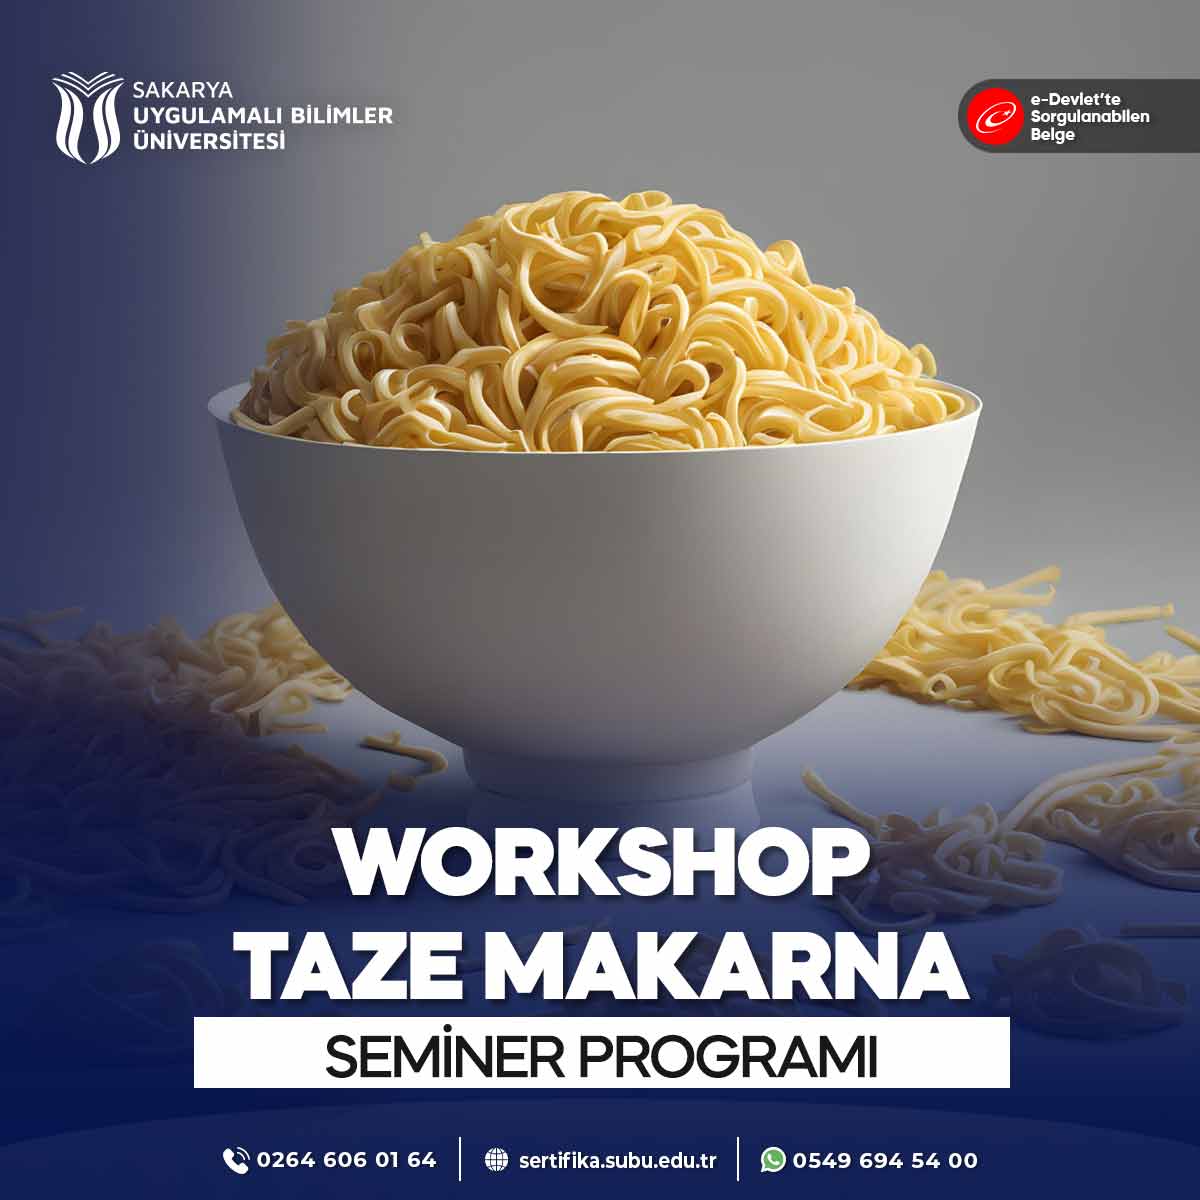 Workshop - Taze Makarna Semineri